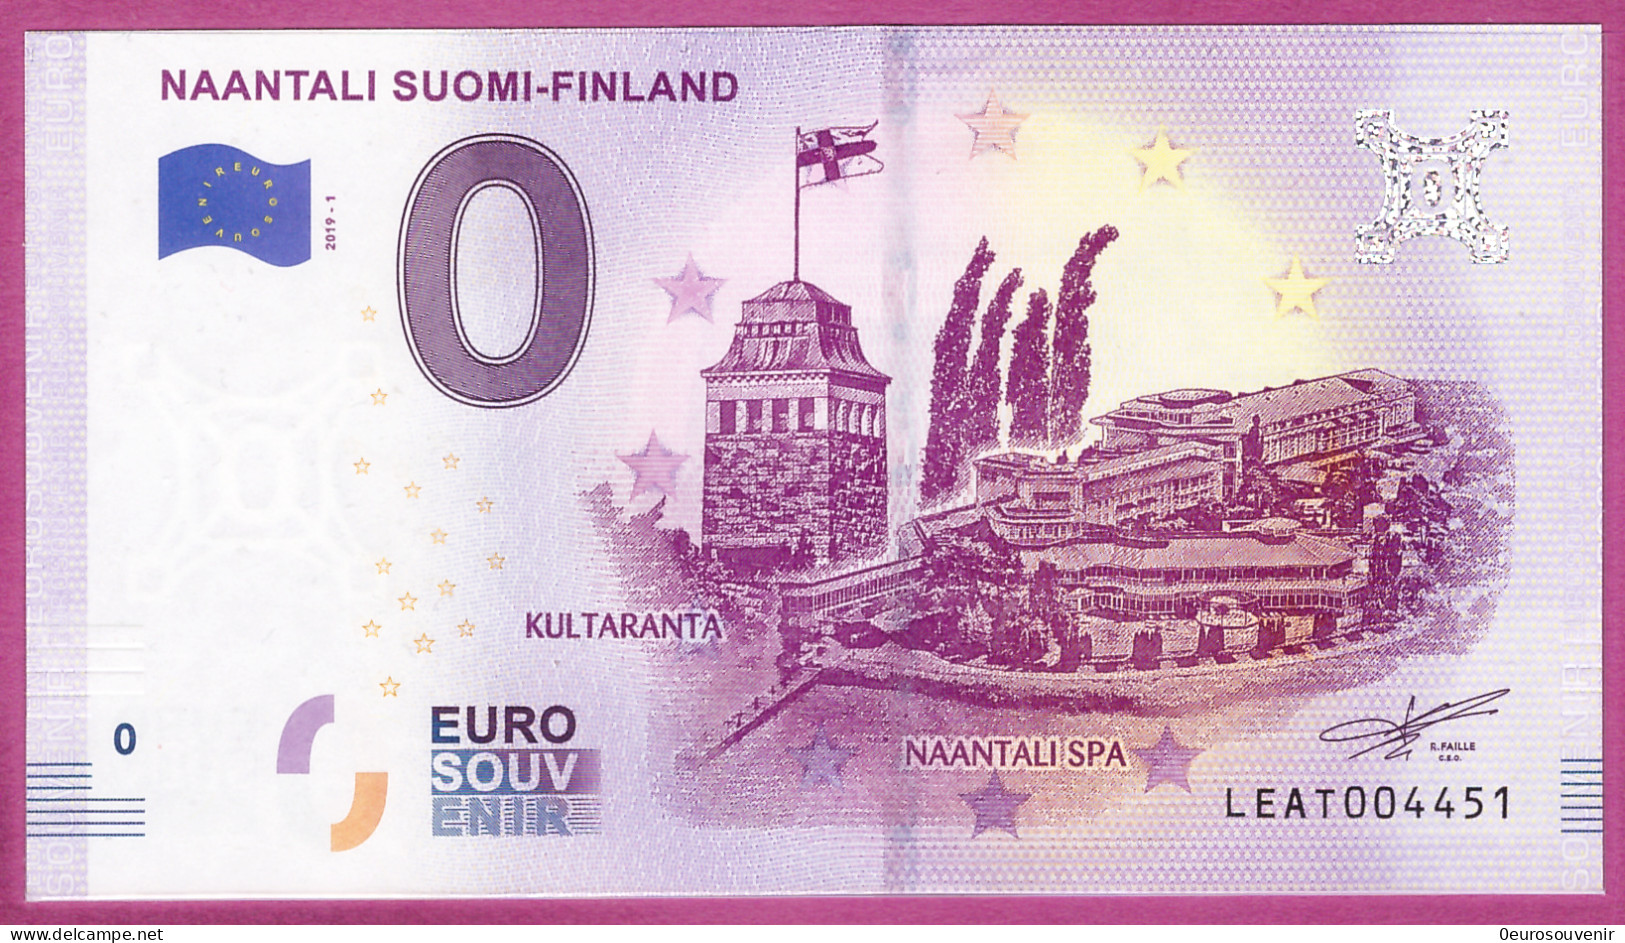 0-Euro LEAT 2019-1 NAANTALI SUOMEN-FINNLAND - Private Proofs / Unofficial